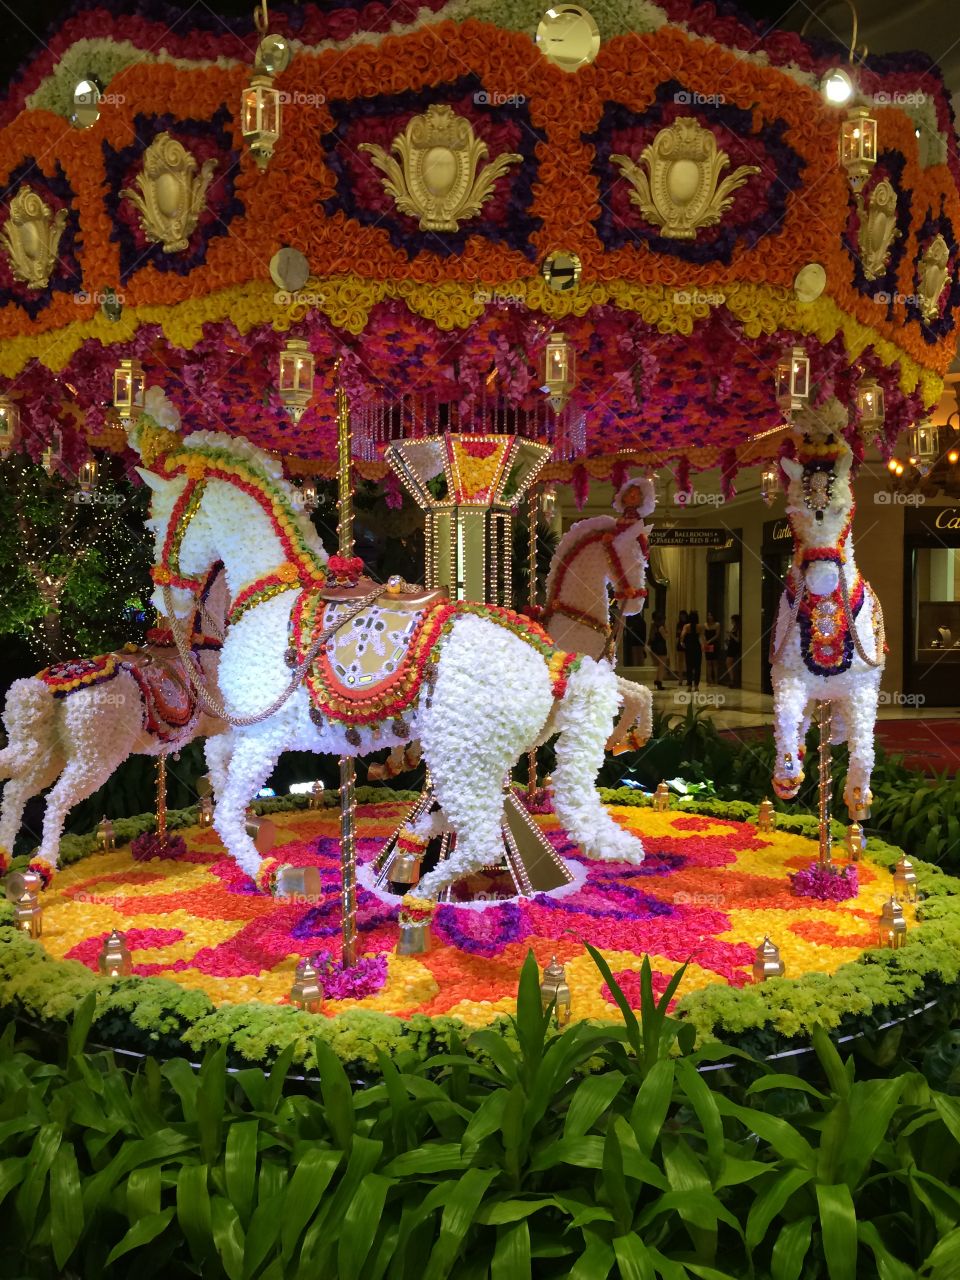 Carousel of Flowers at Wynn Hotel in Vegas